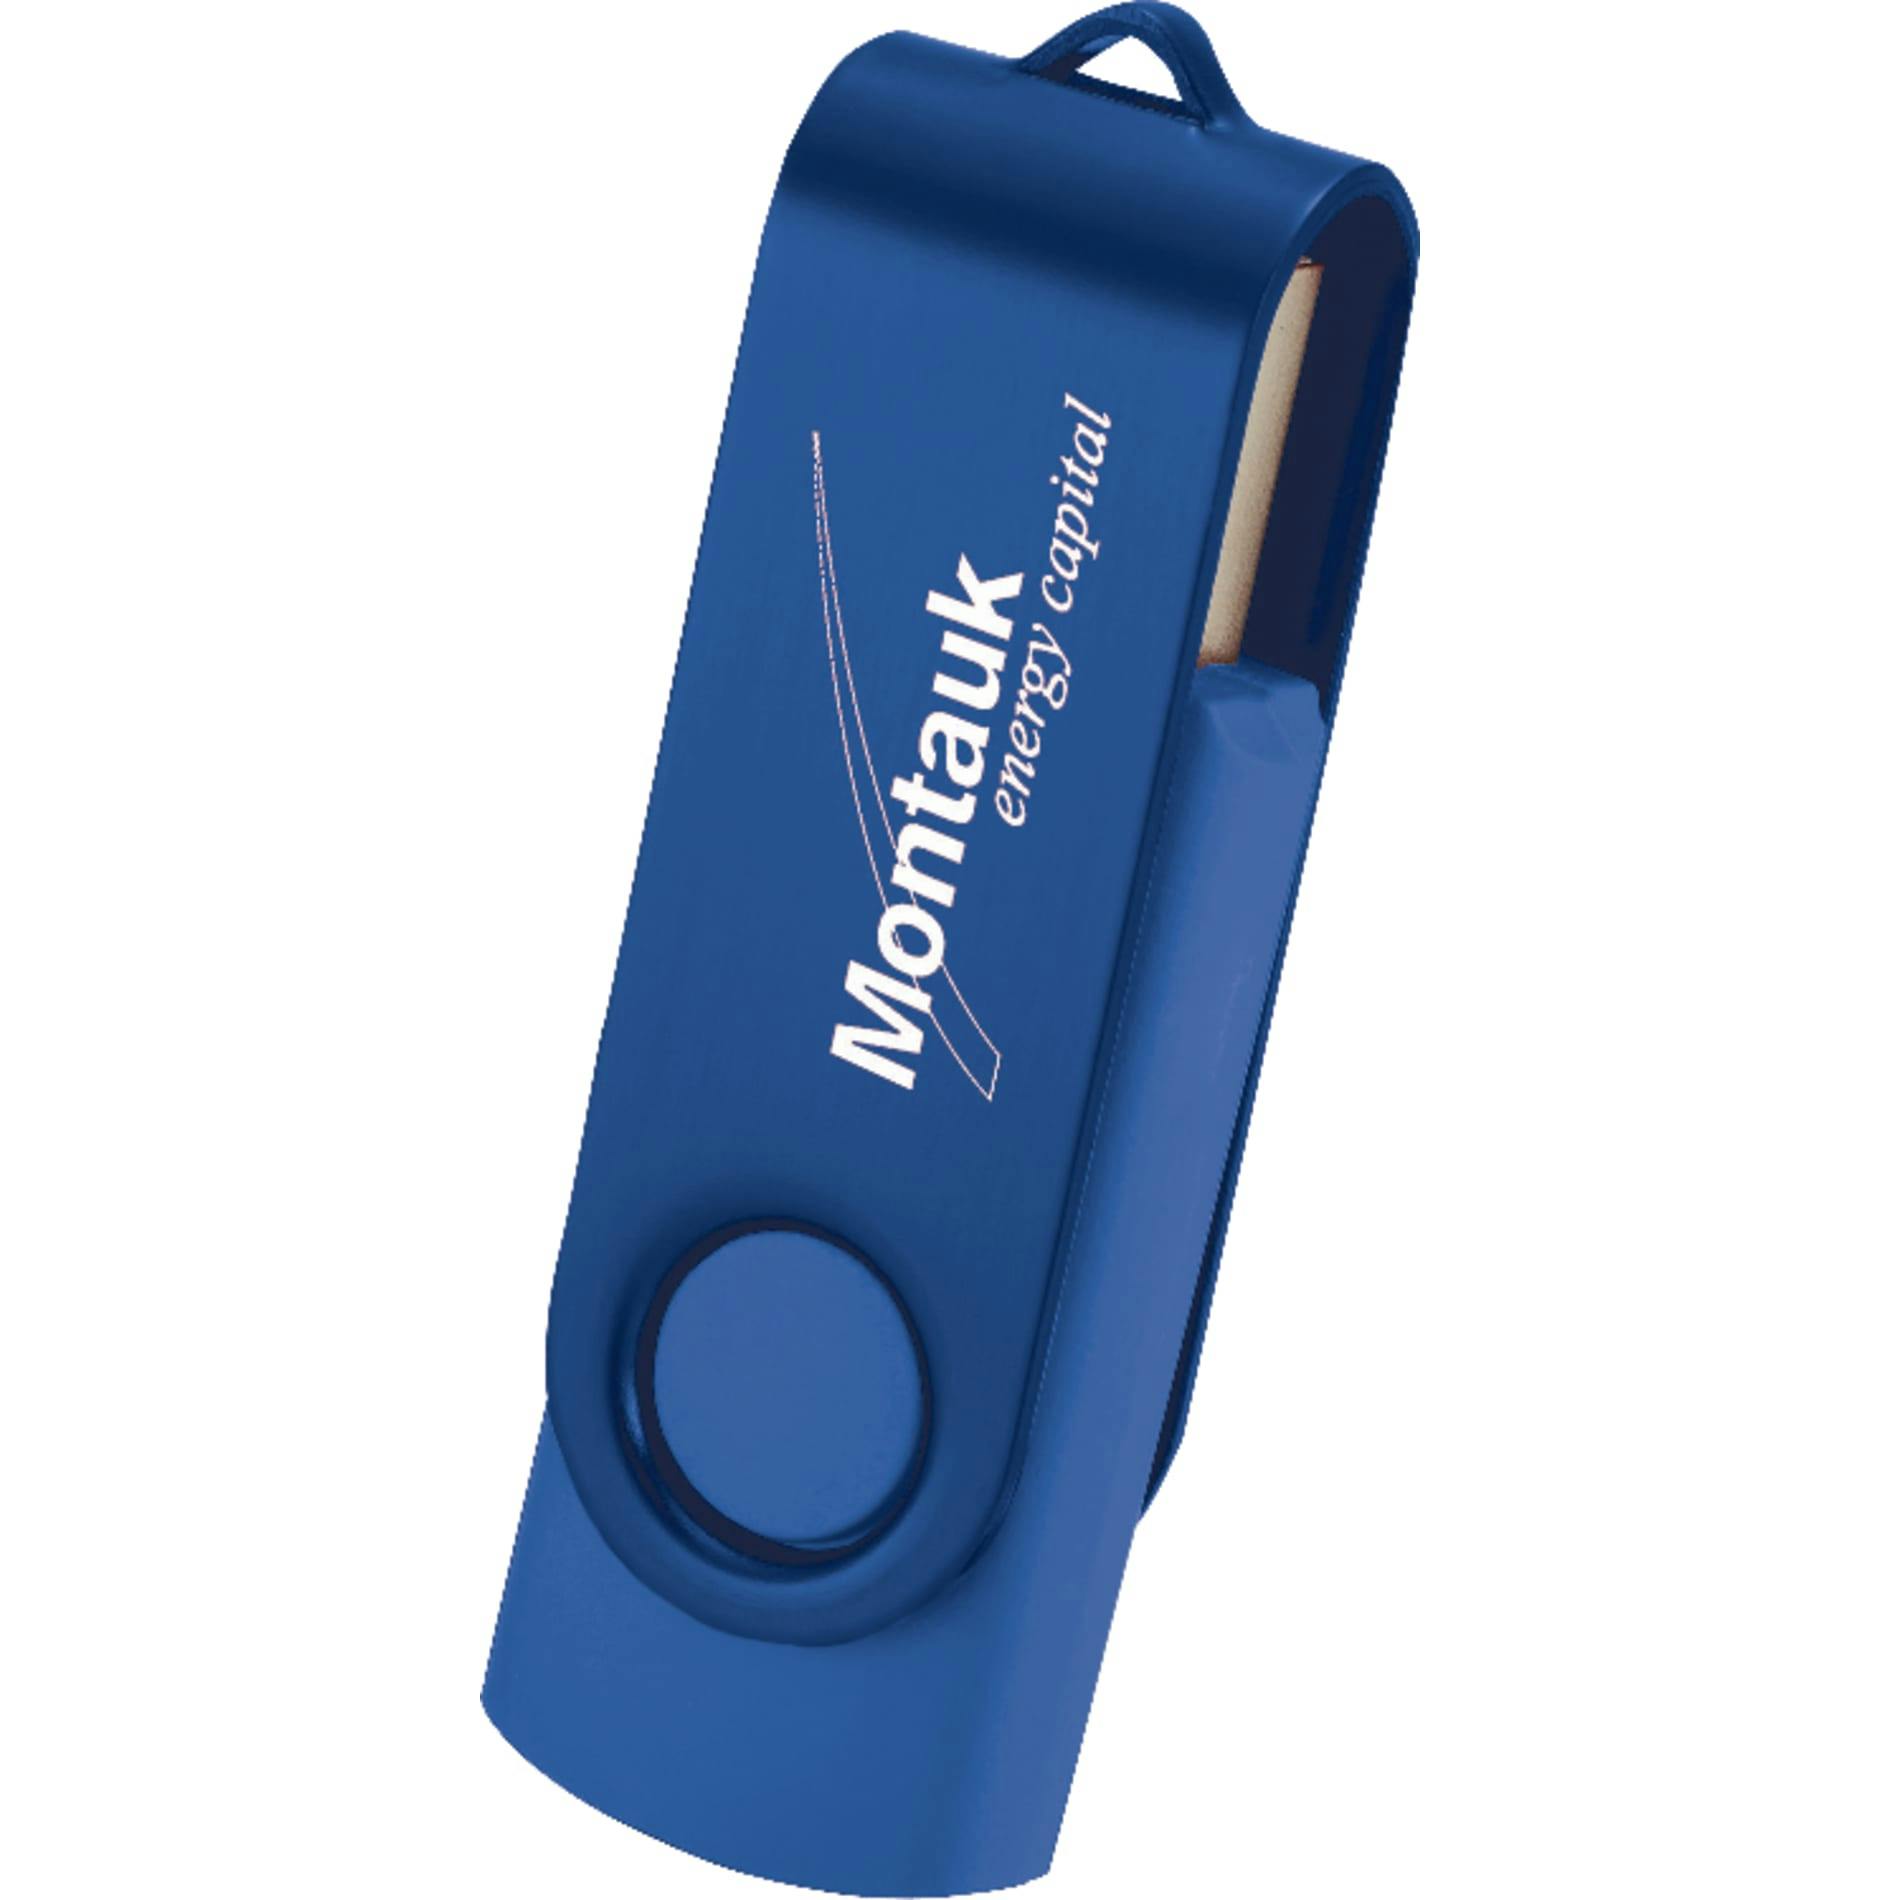 Rotate 2Tone Flash Drive 8GB - additional Image 1